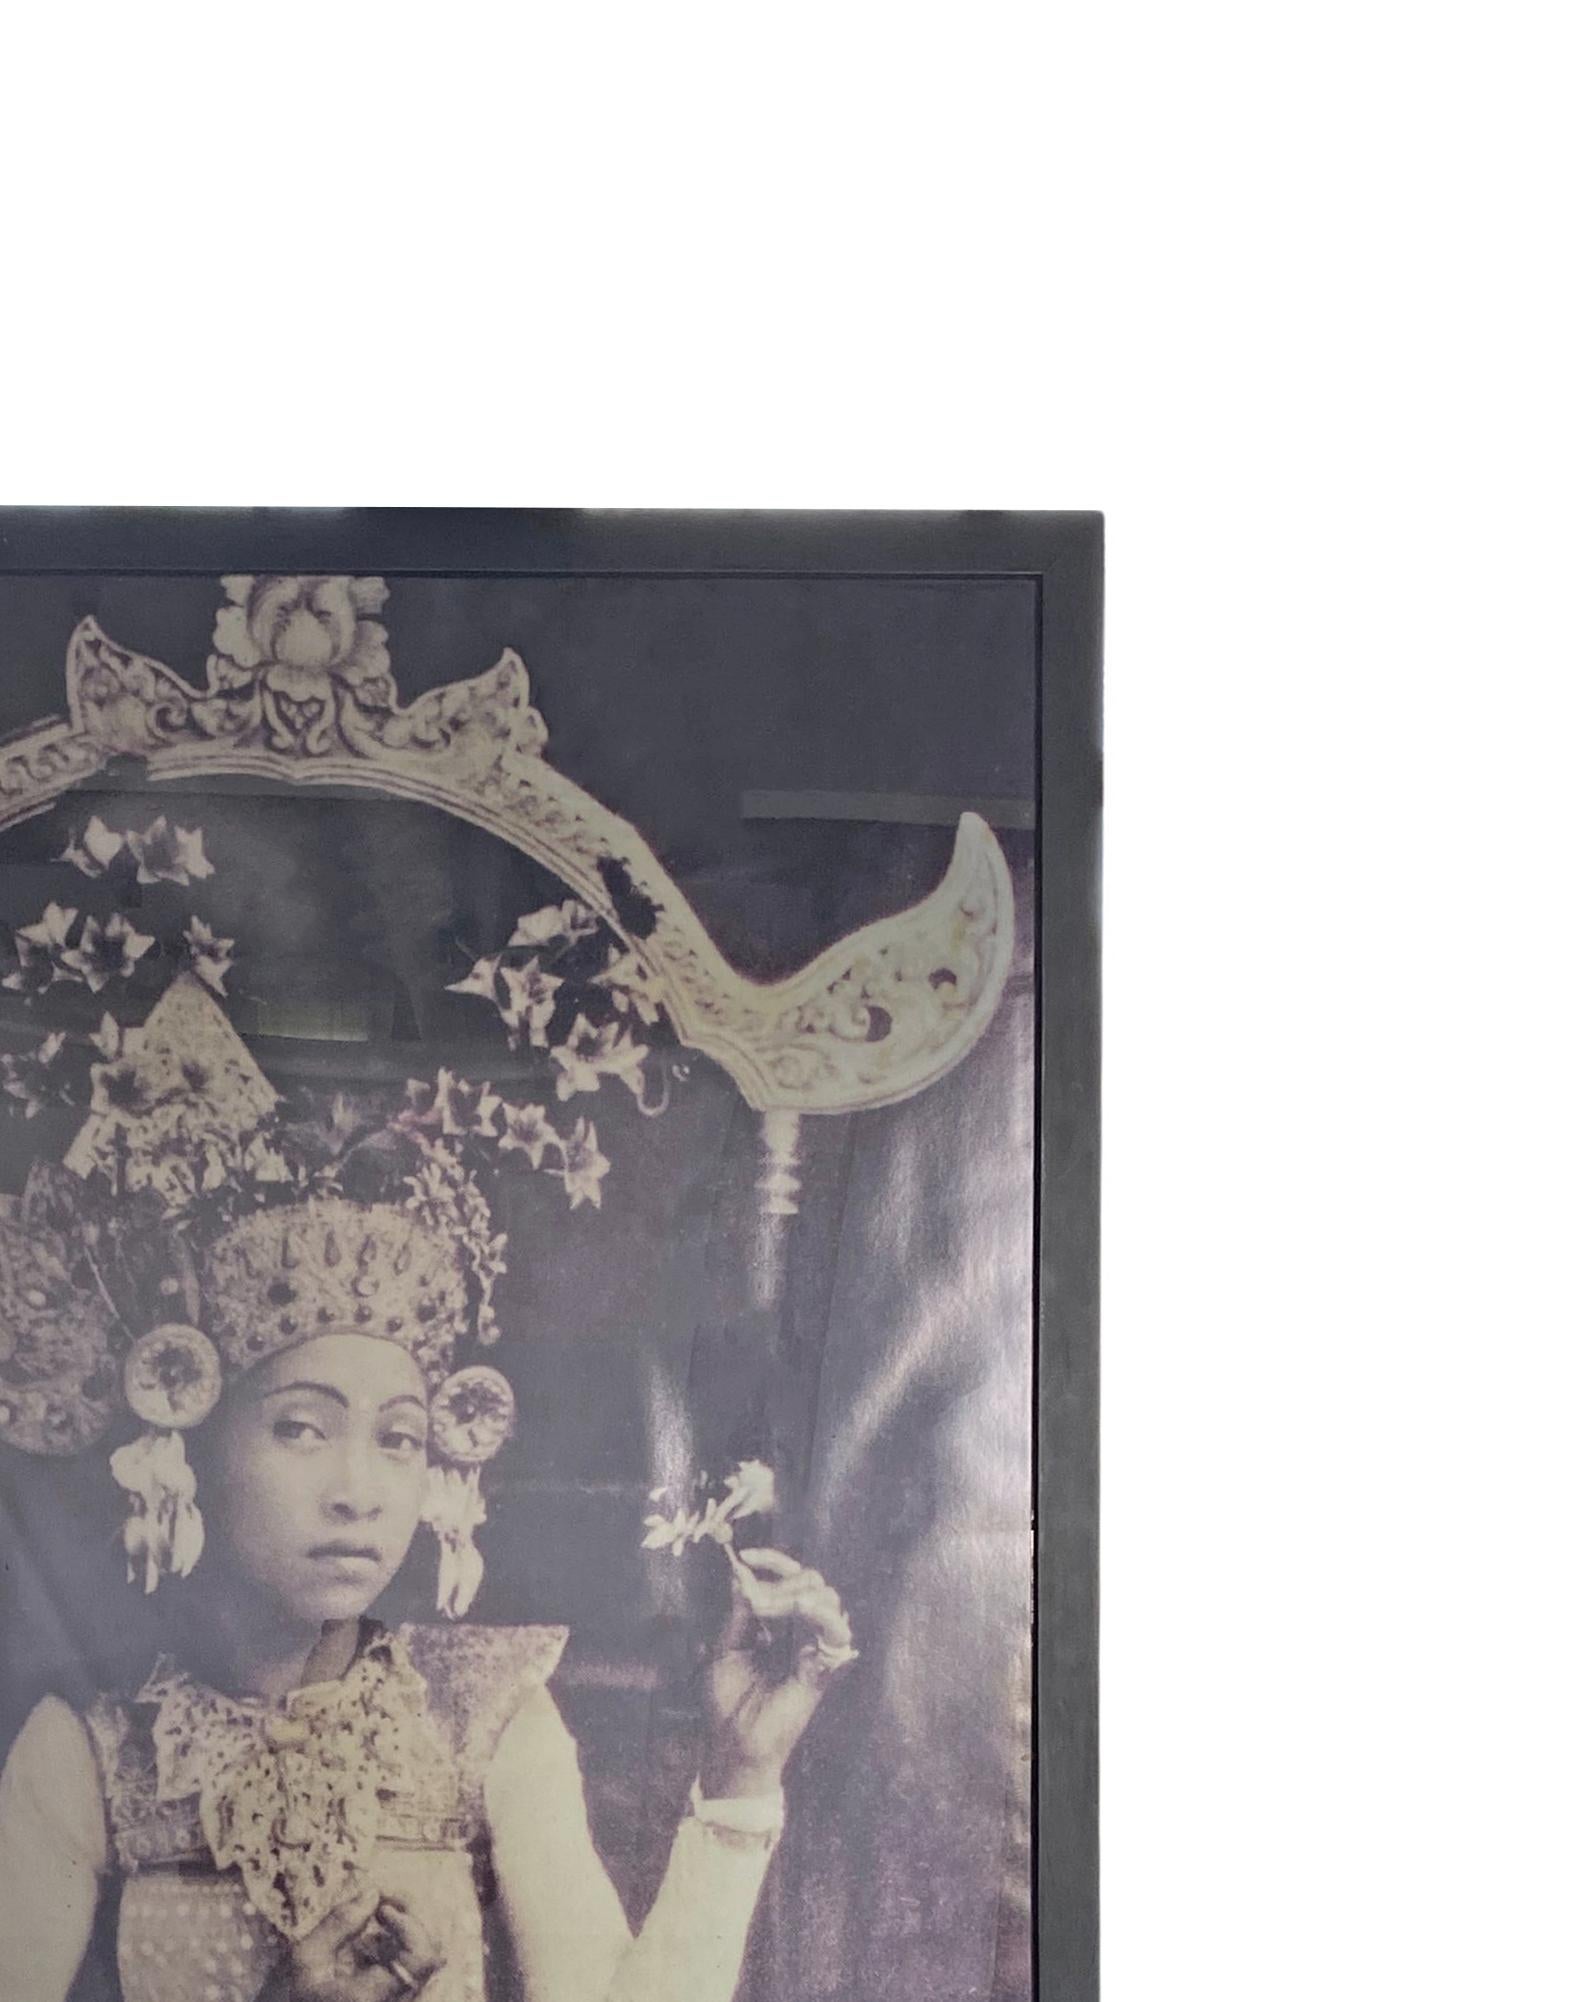 Other Framed Portrait of Balinese Girl in Ceremonial Attire Black & White